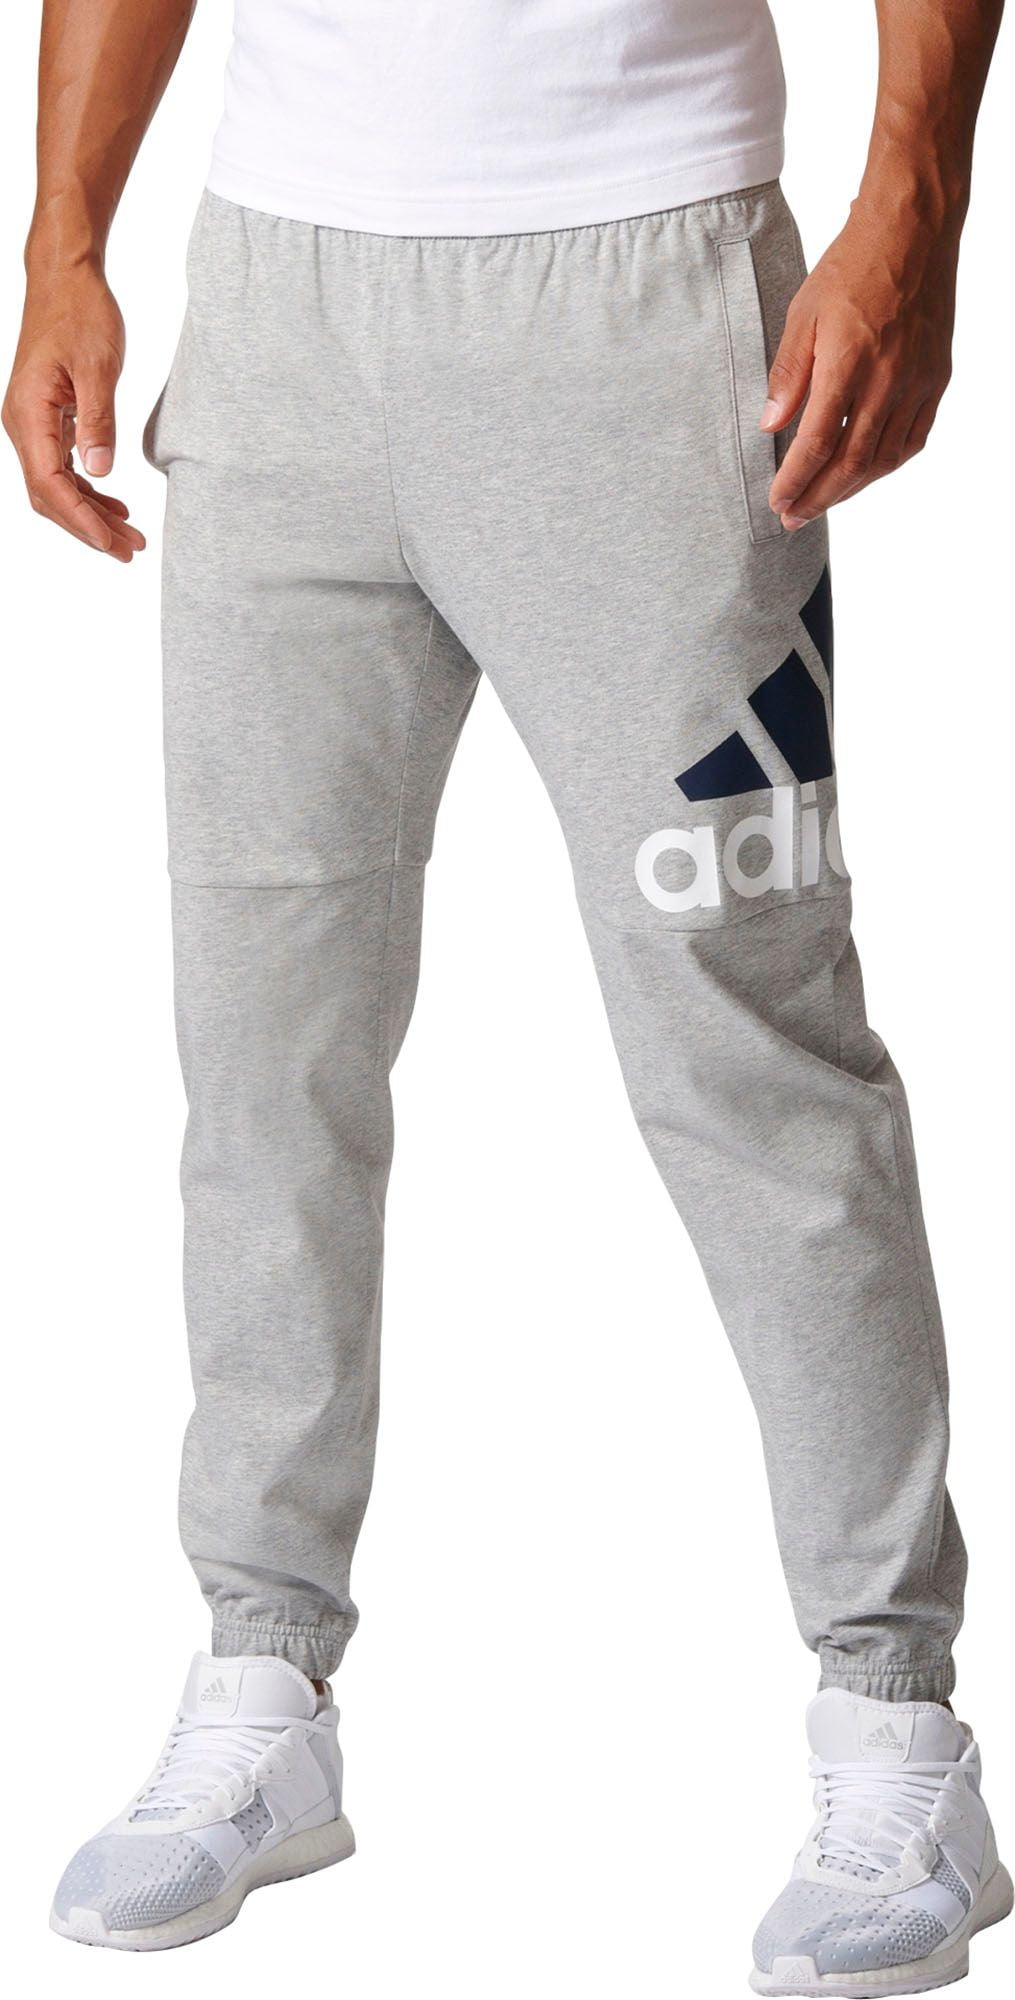 - XL Pants Adidas Medium Logo - Essentials Performance - Mens Grey Heather/White/Black